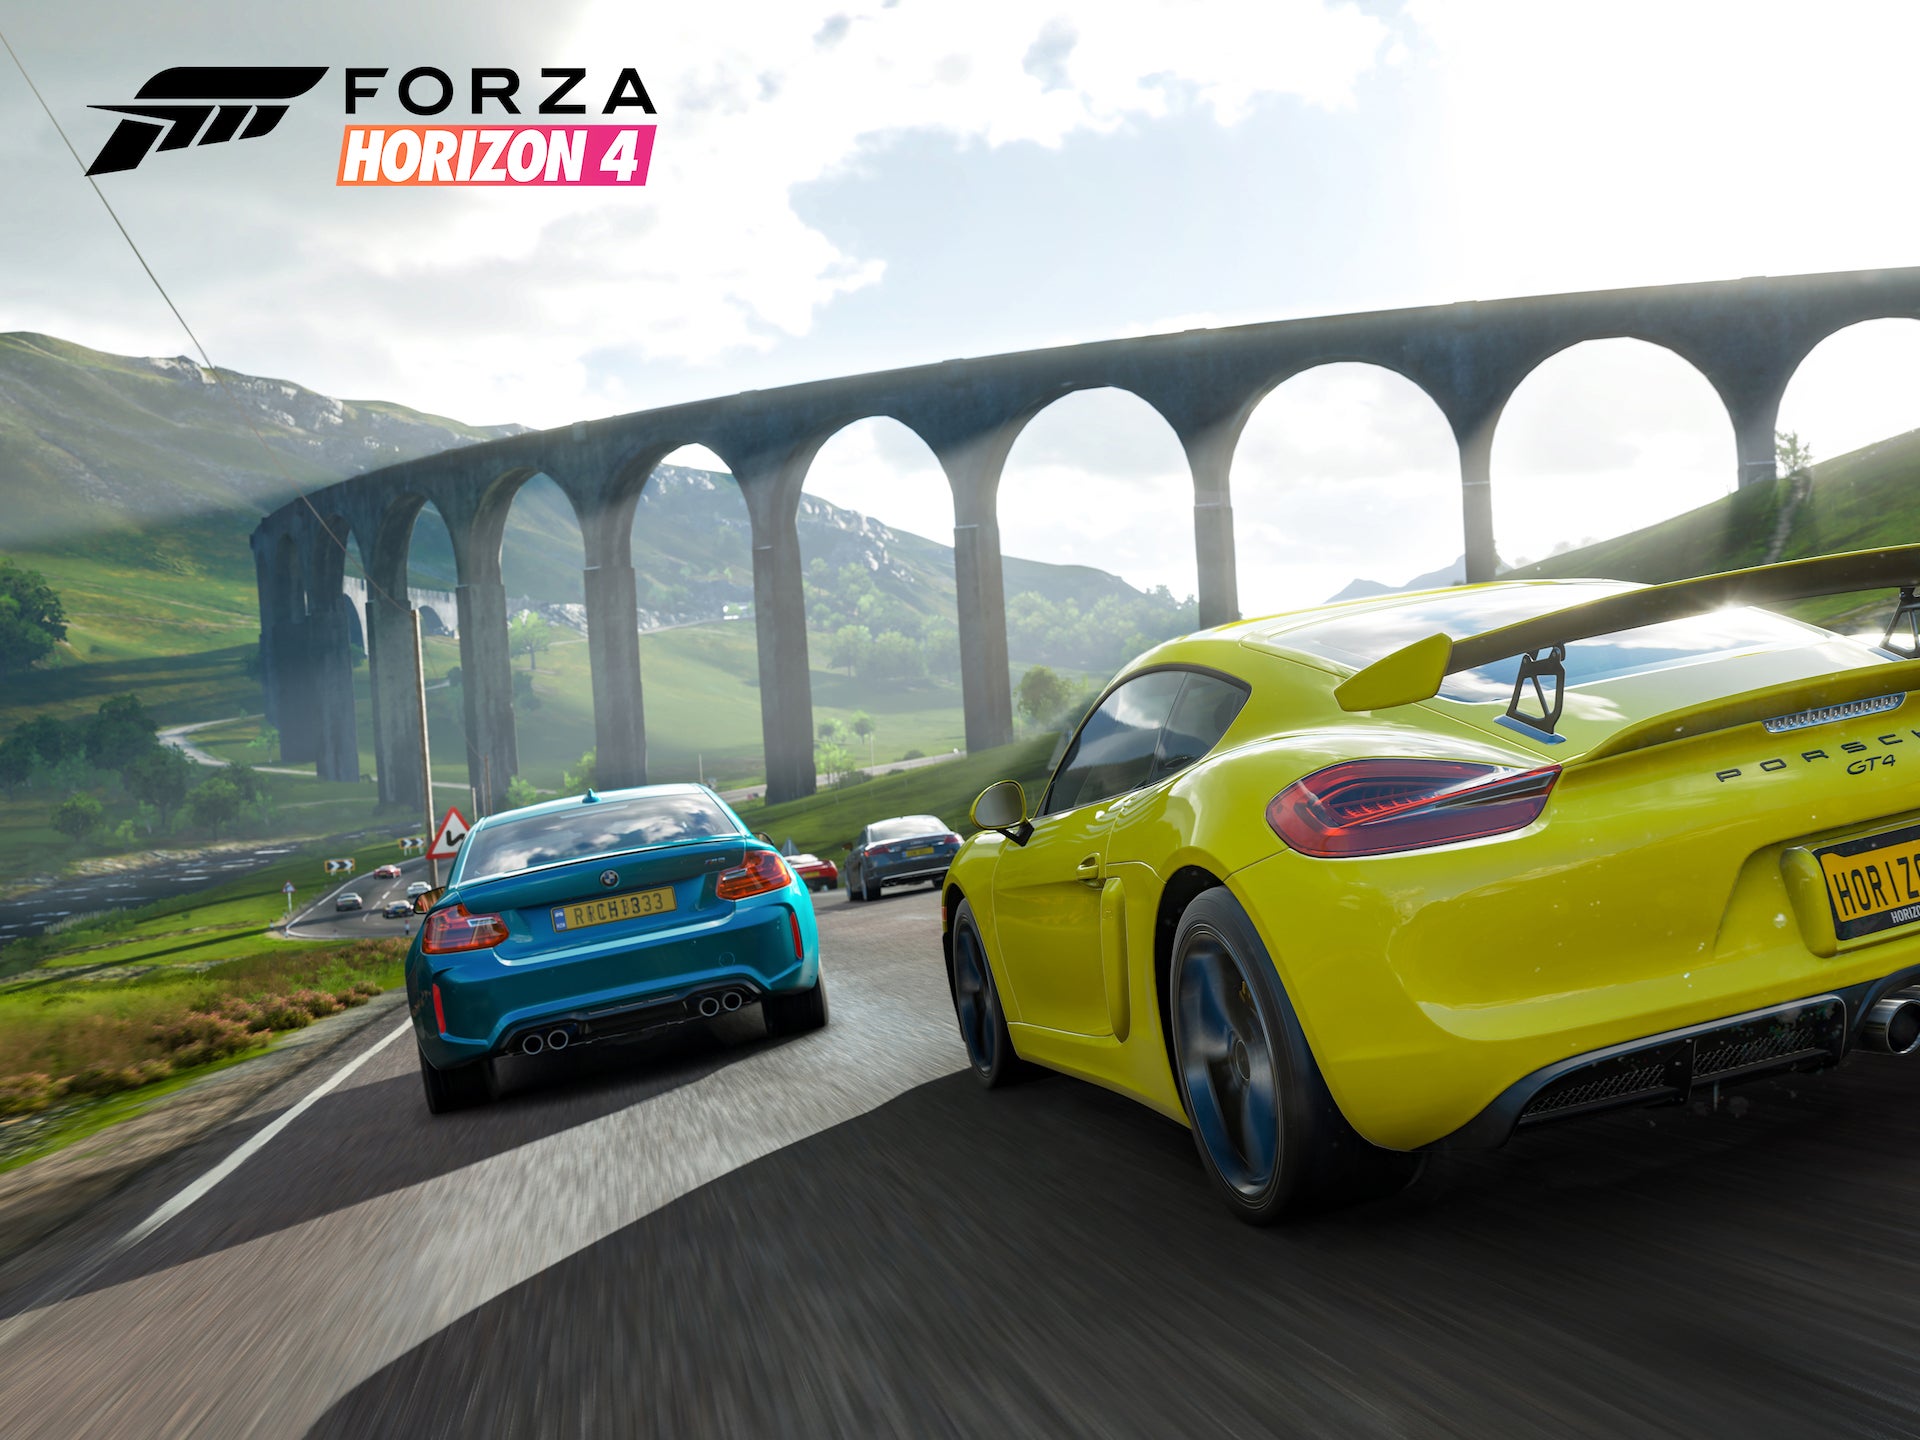 Microsoft's Forza Horizon 4 Is Headed to Steam